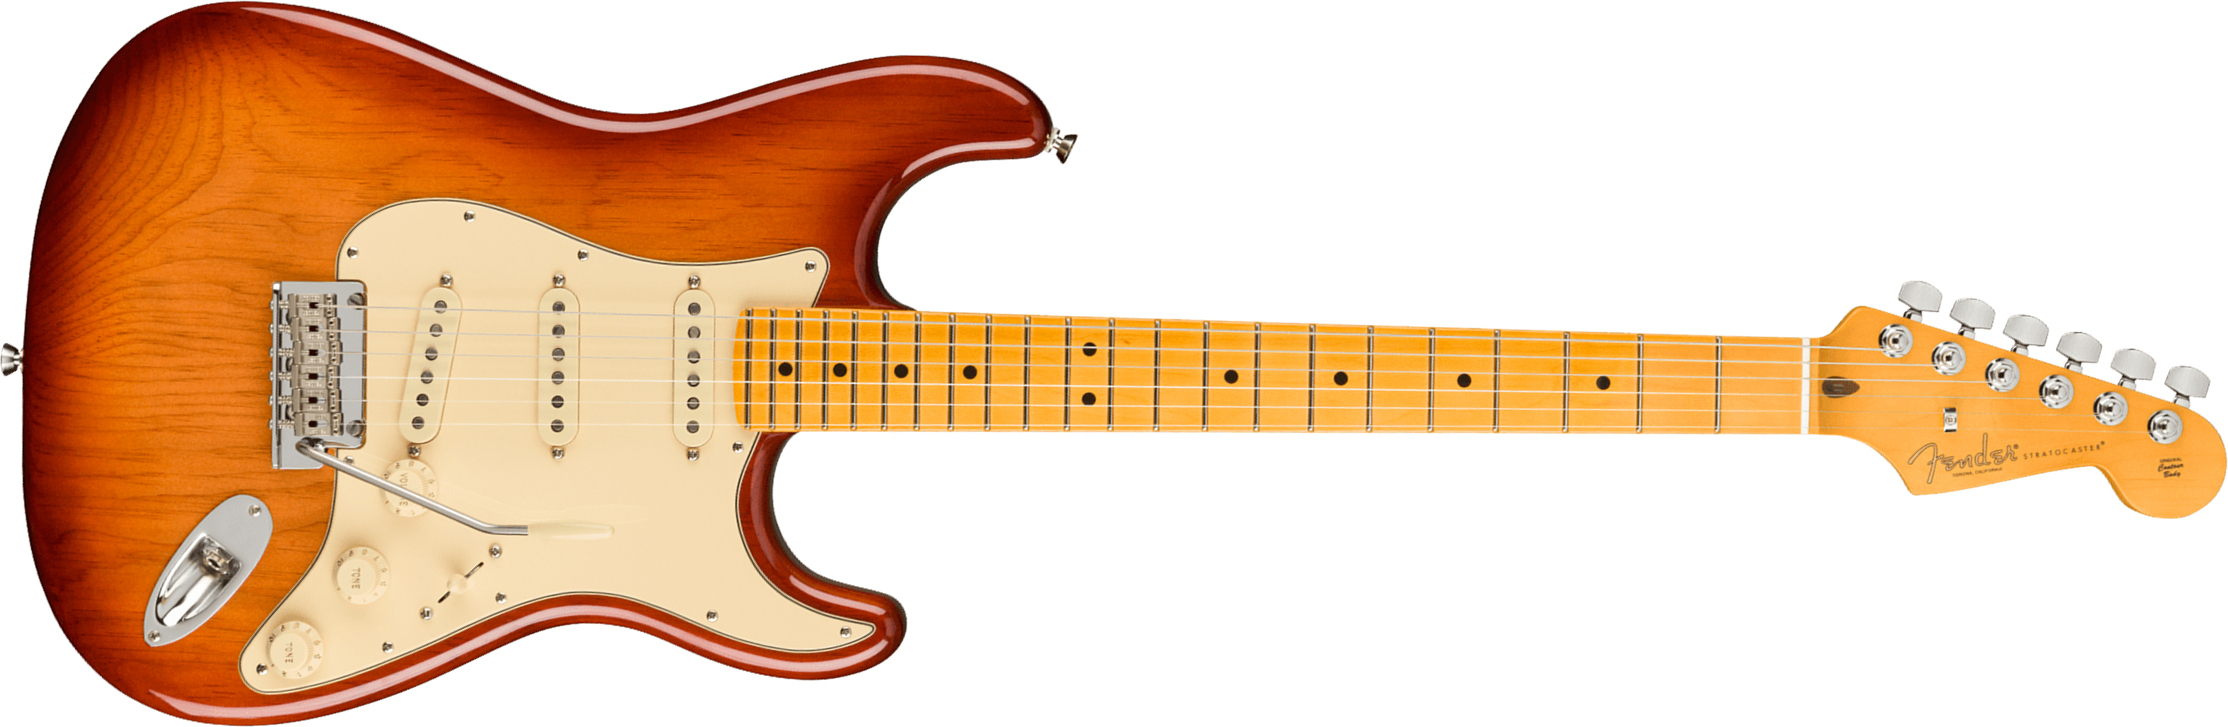 Fender Strat American Professional Ii Usa Mn - Sienna Sunburst - E-Gitarre in Str-Form - Main picture